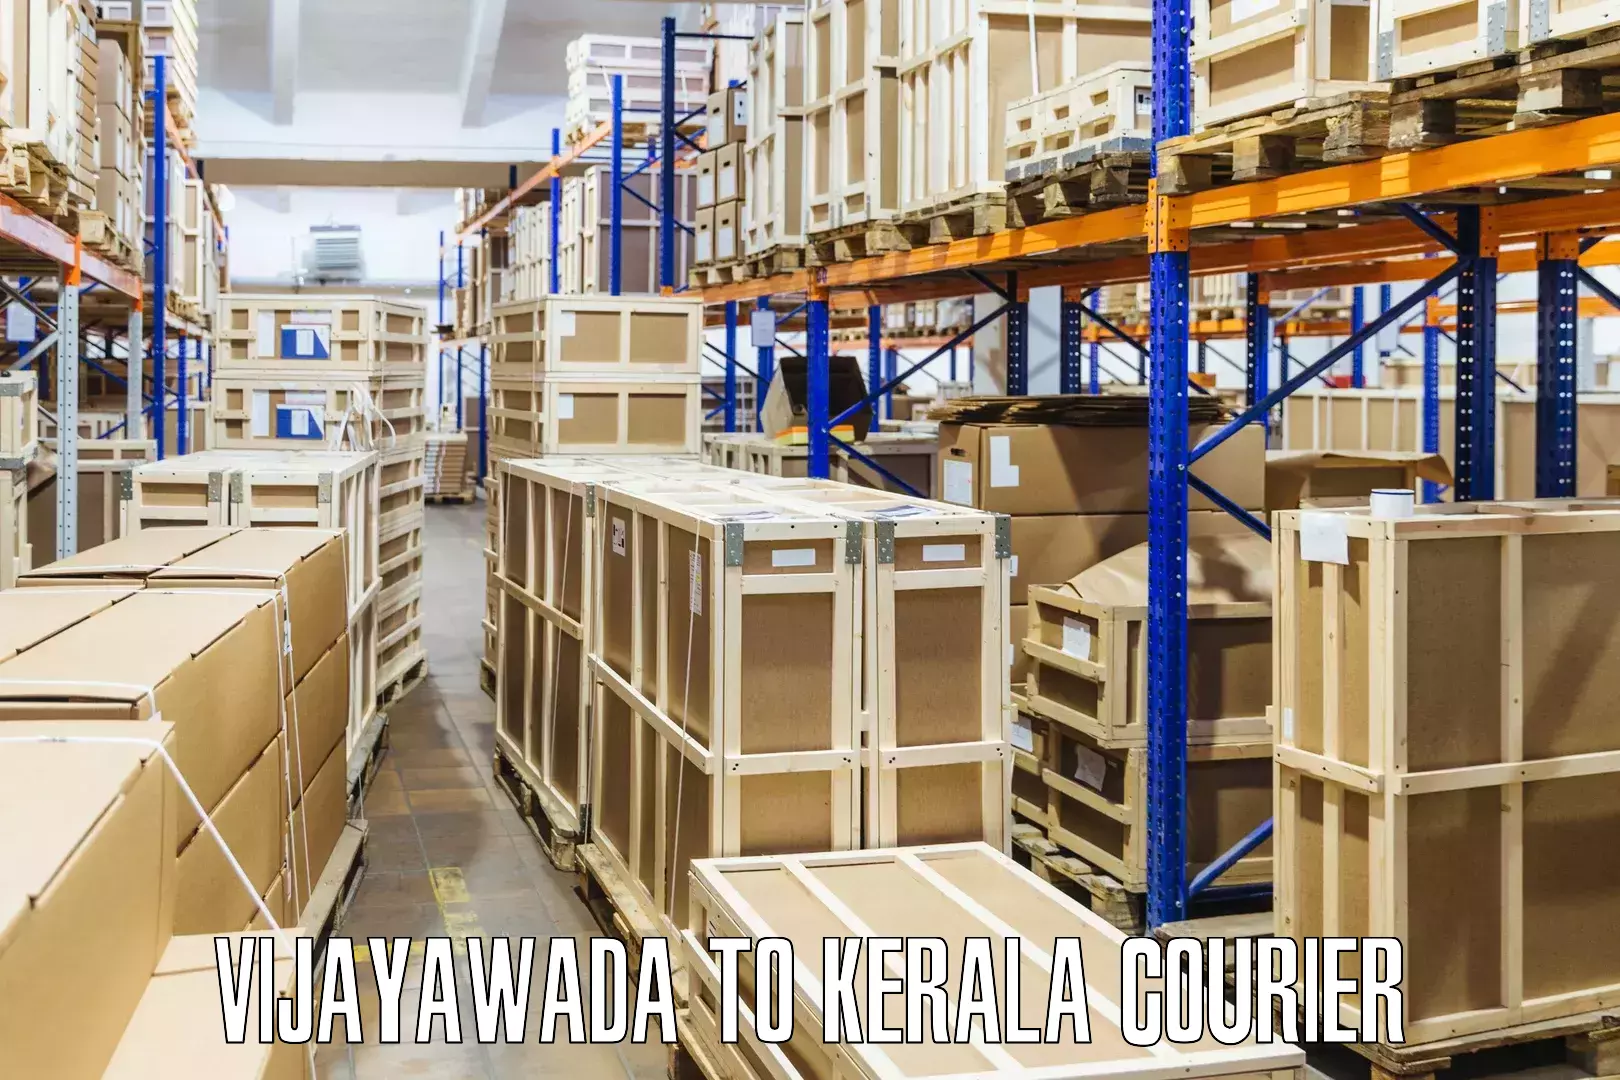 24-hour courier service Vijayawada to Kerala